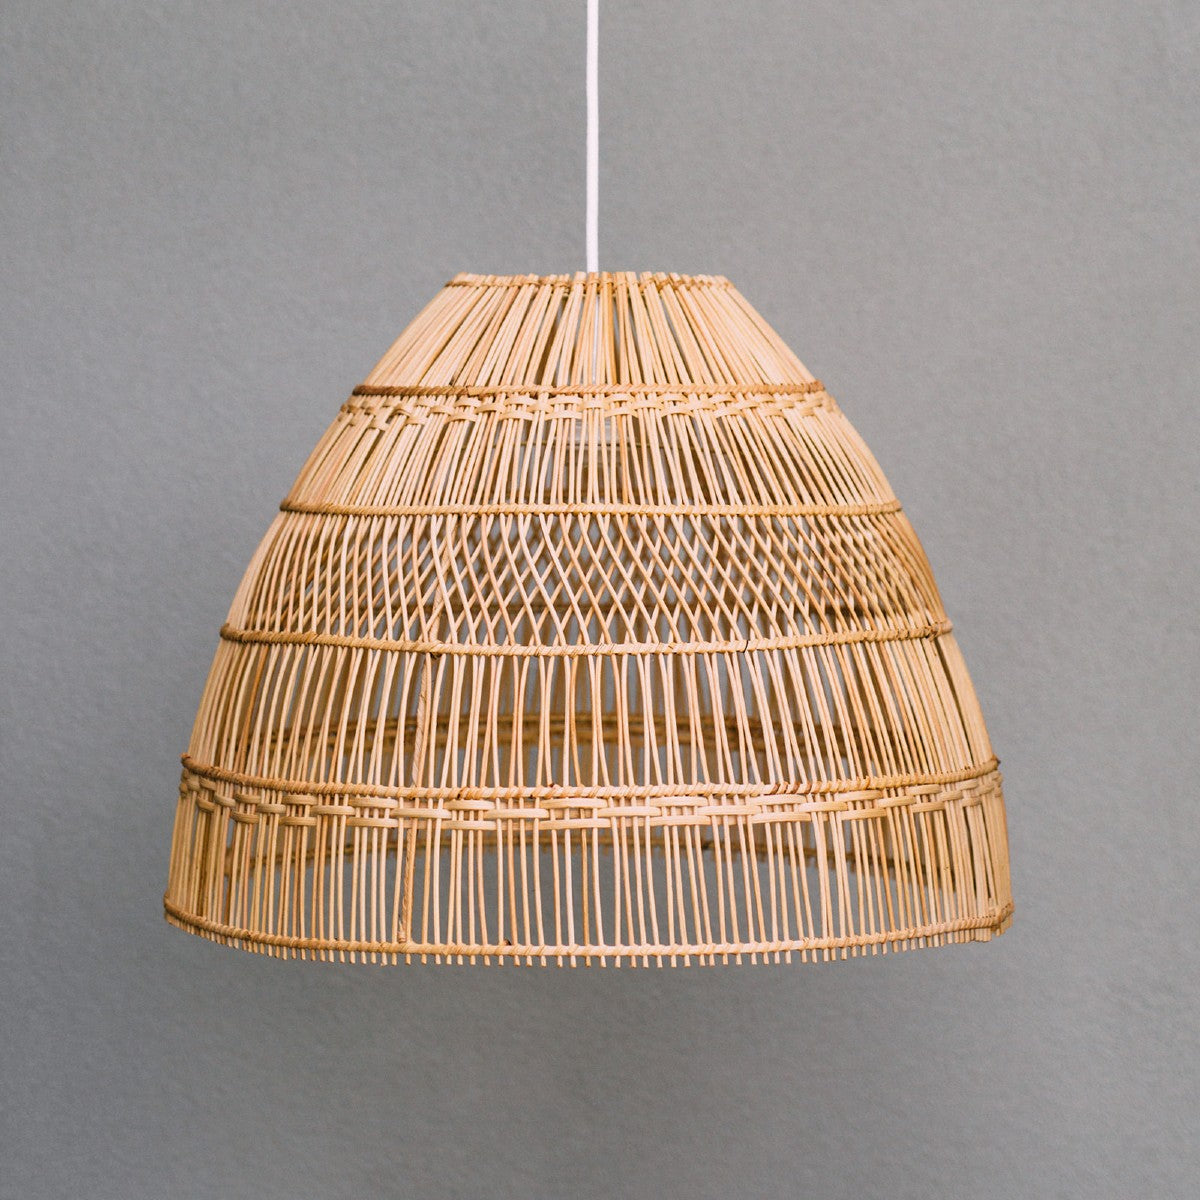 Mediterranean style pendant light.Coastal-style-lighting-natural-rattan-pendant-light-with-straight-and-diamond-weave-design